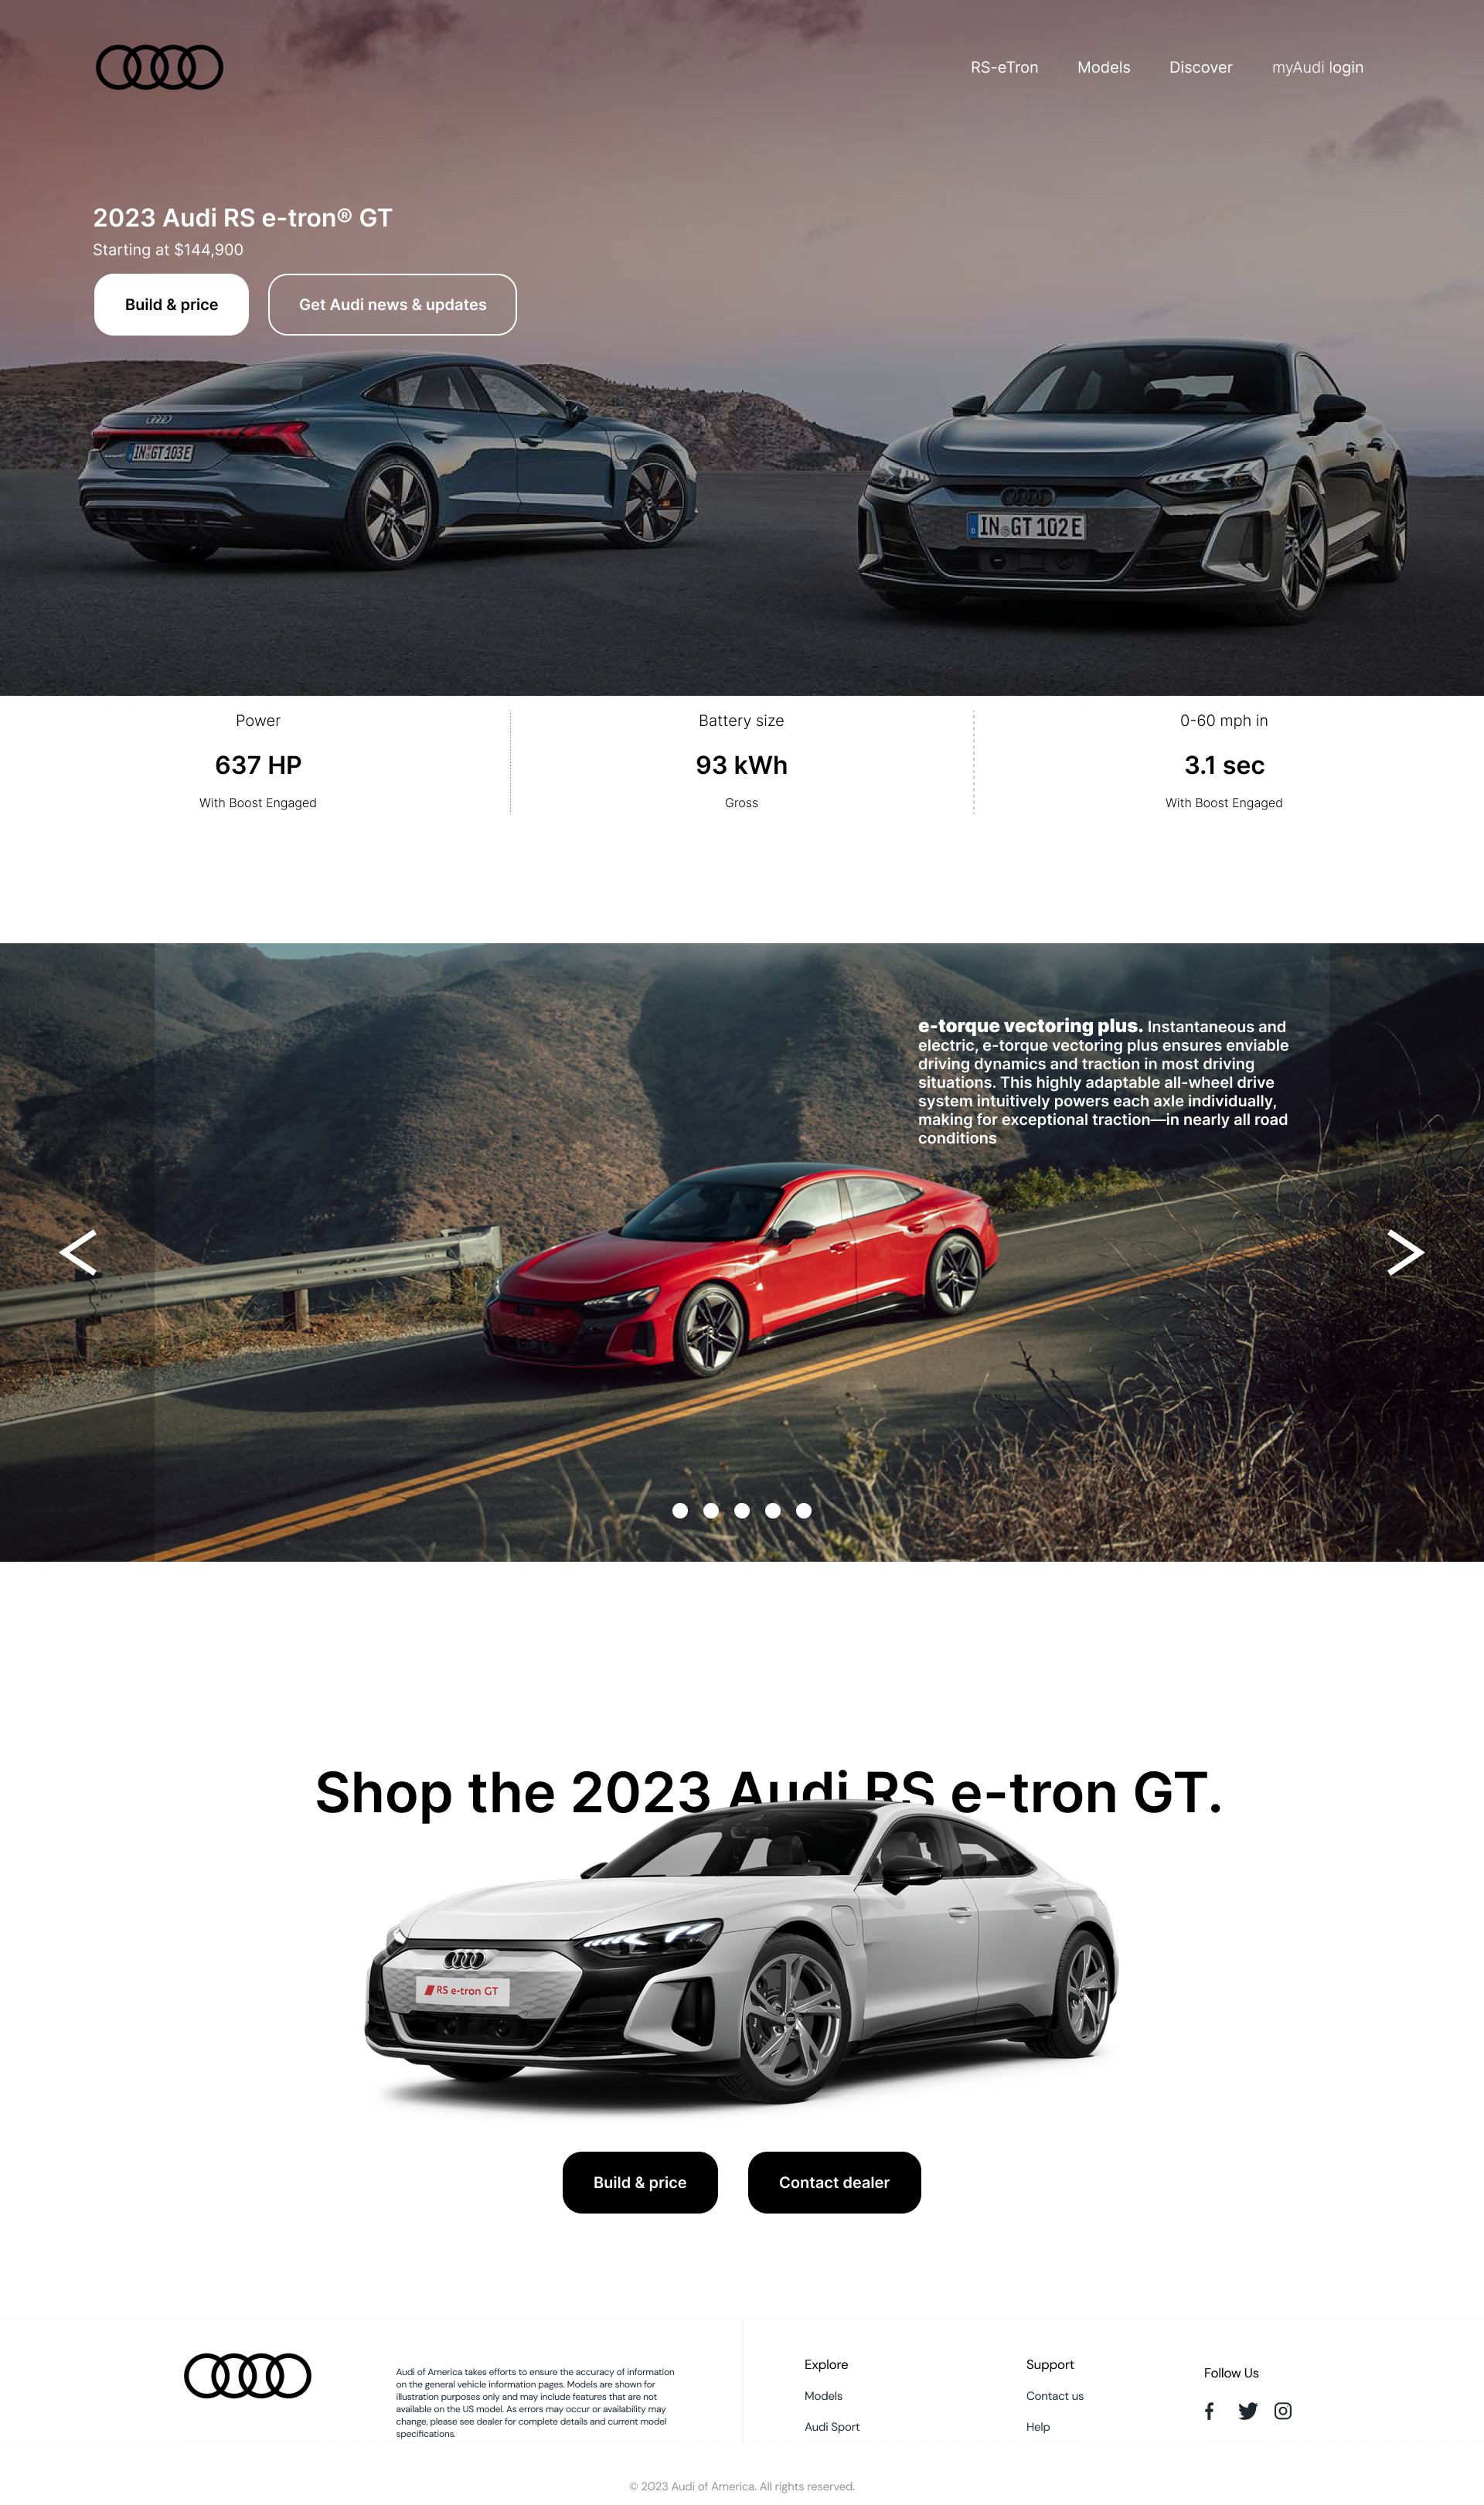 2023 Audi RS e-tron® GT网站落地页UI设计 - 现代科技感的Audi网站UI素材下载 figma格式-UI/UX-到位啦UI